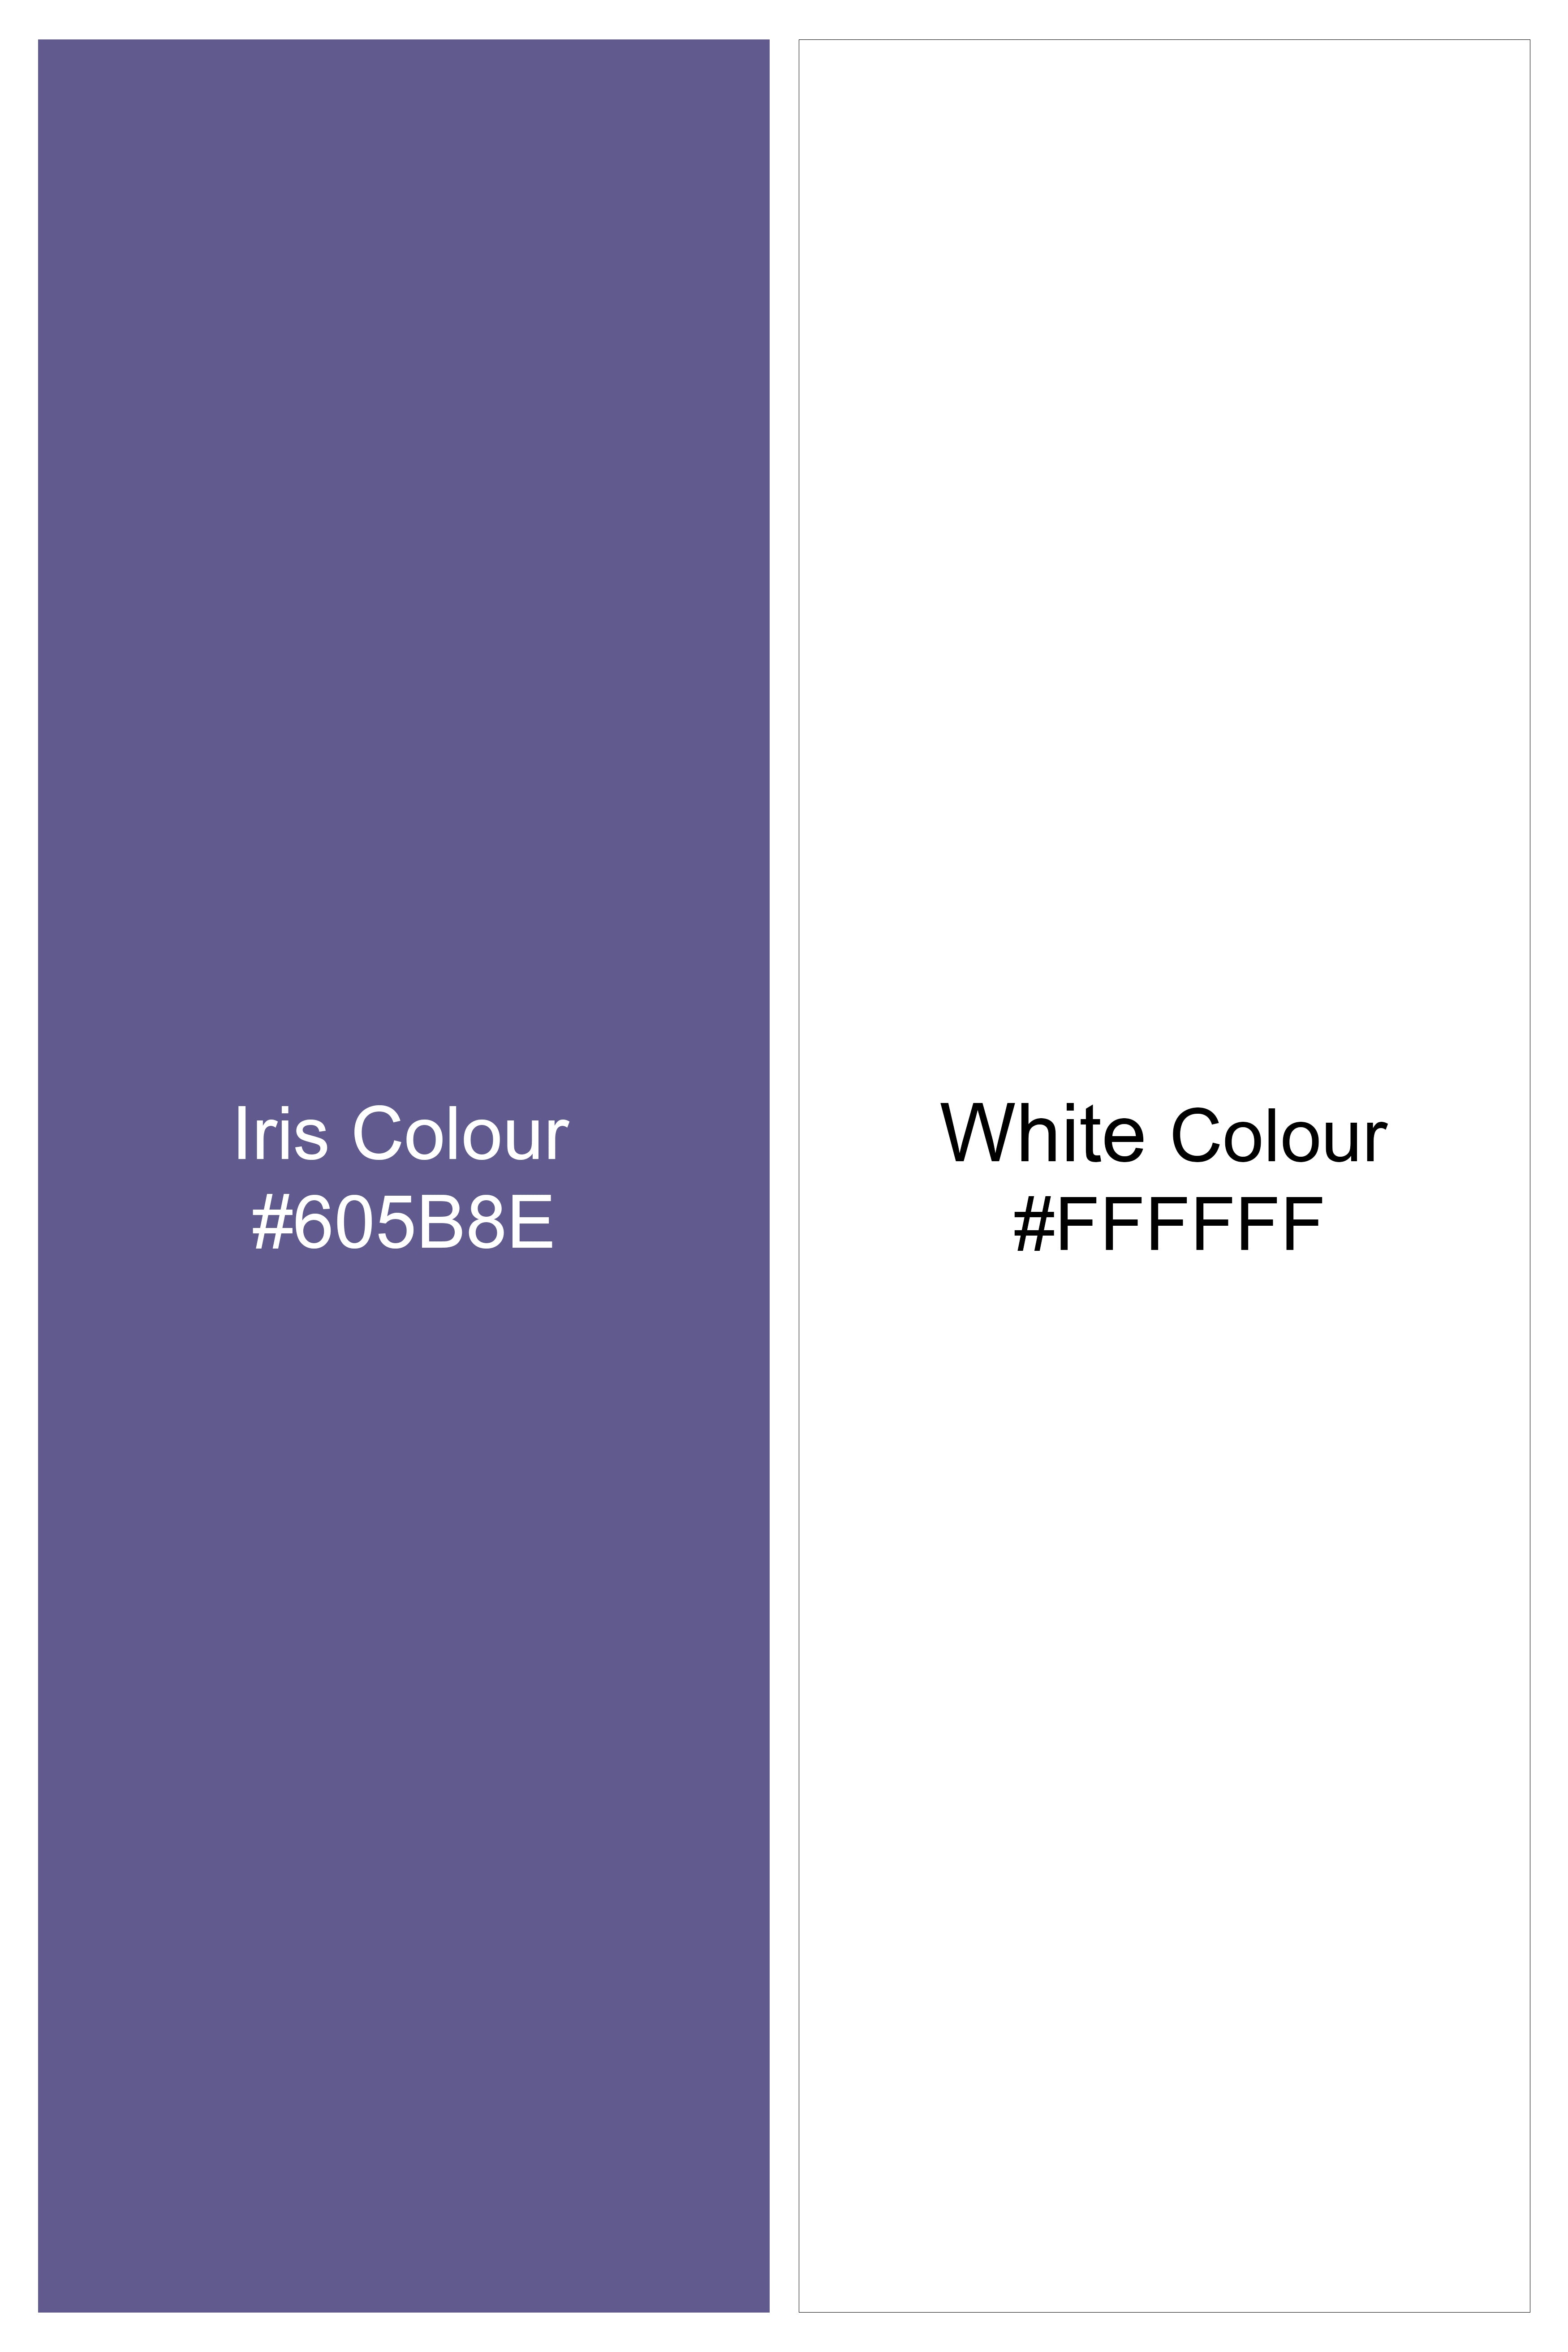 Iris Blue and White Jacquard Textured Premium Giza Cotton Shirt